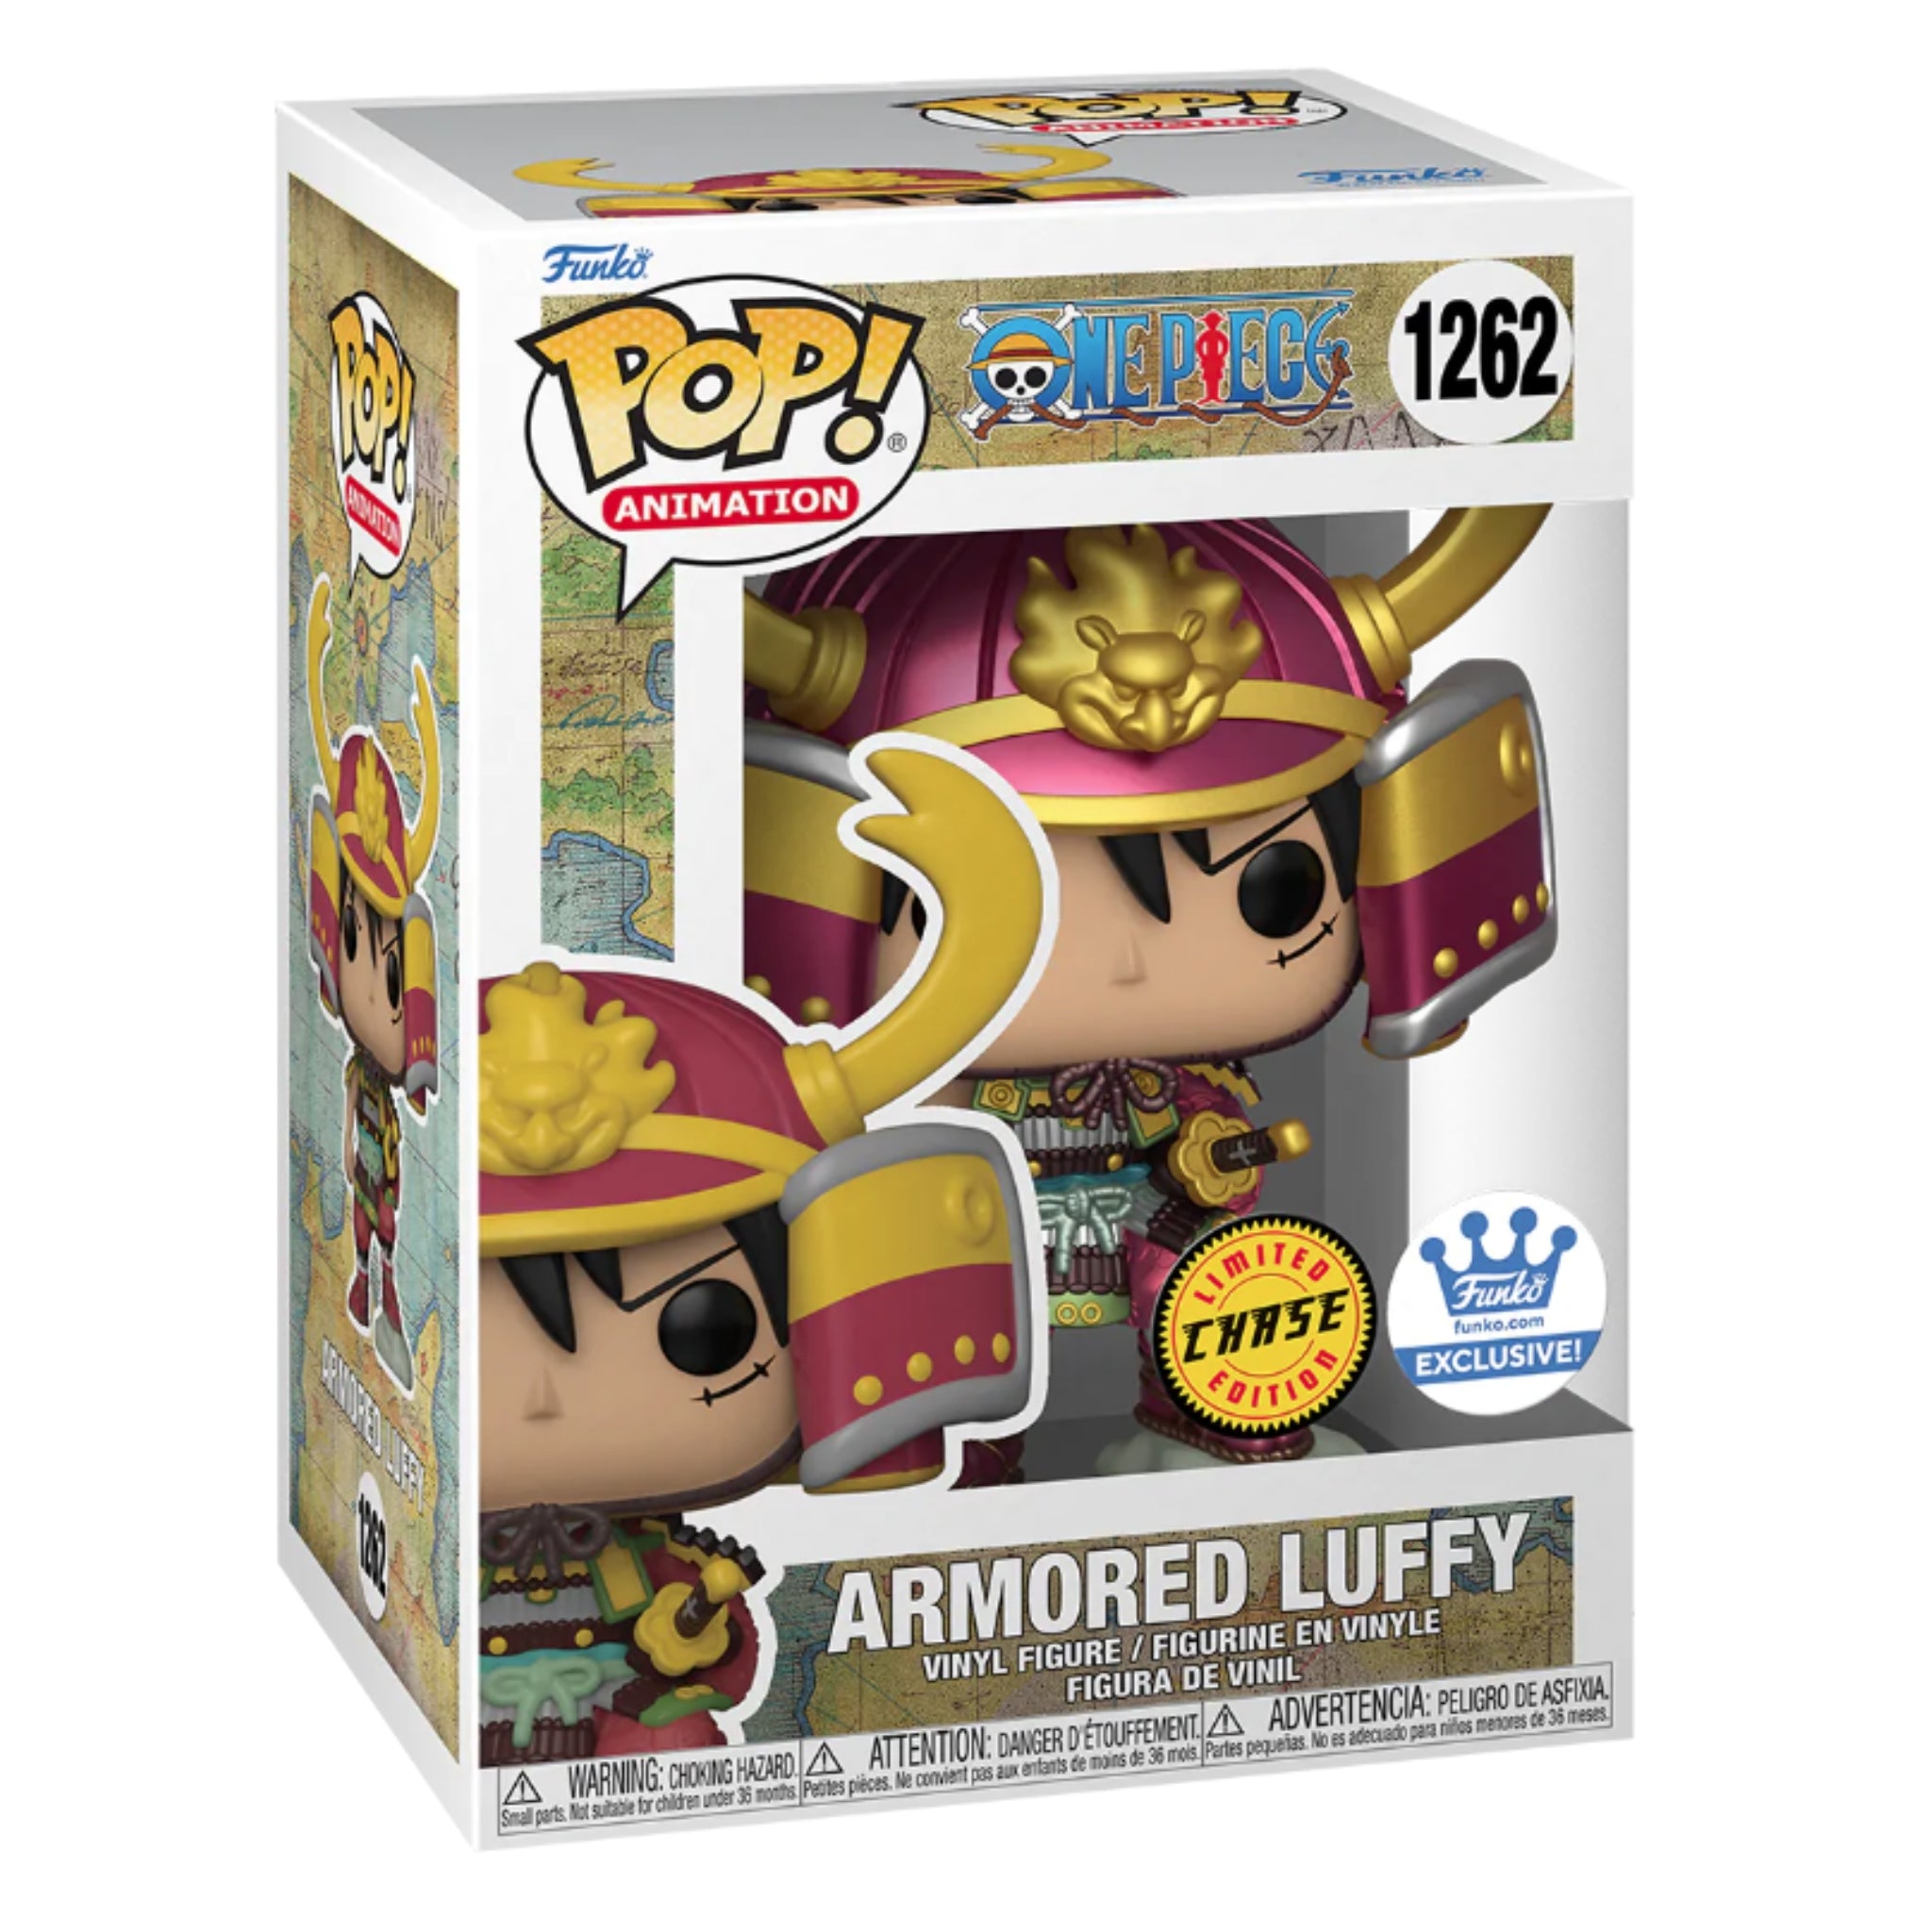 Armored Luffy Funko Pop! CHASE FUNKO EXCLUSIVE